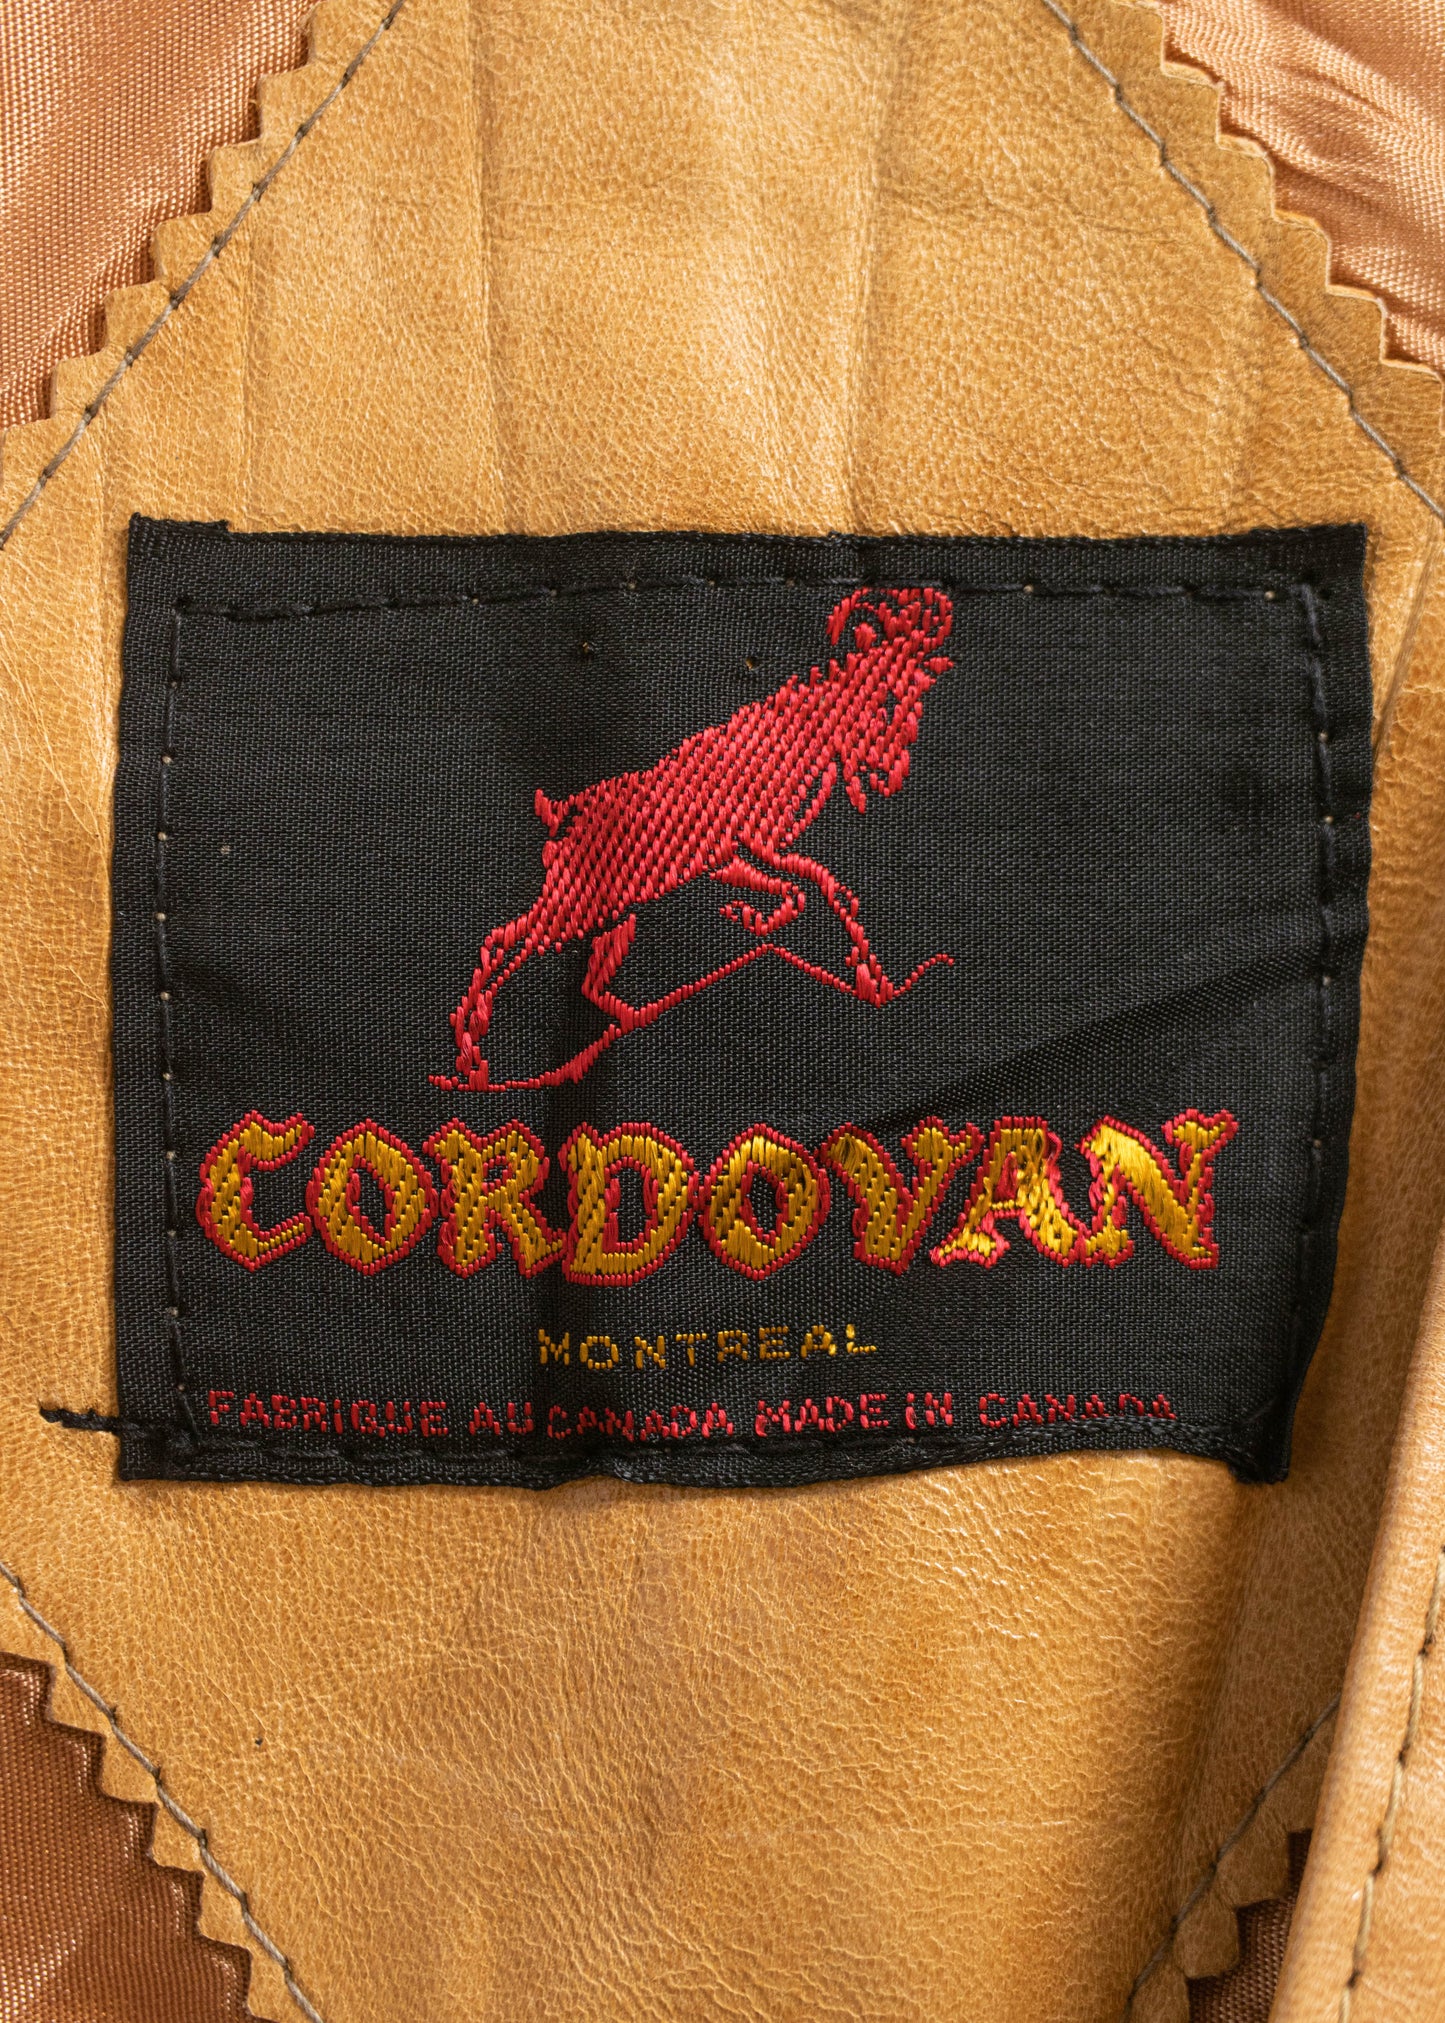 1980s Cordovan Montreal Leather Suit Vest Size S/M